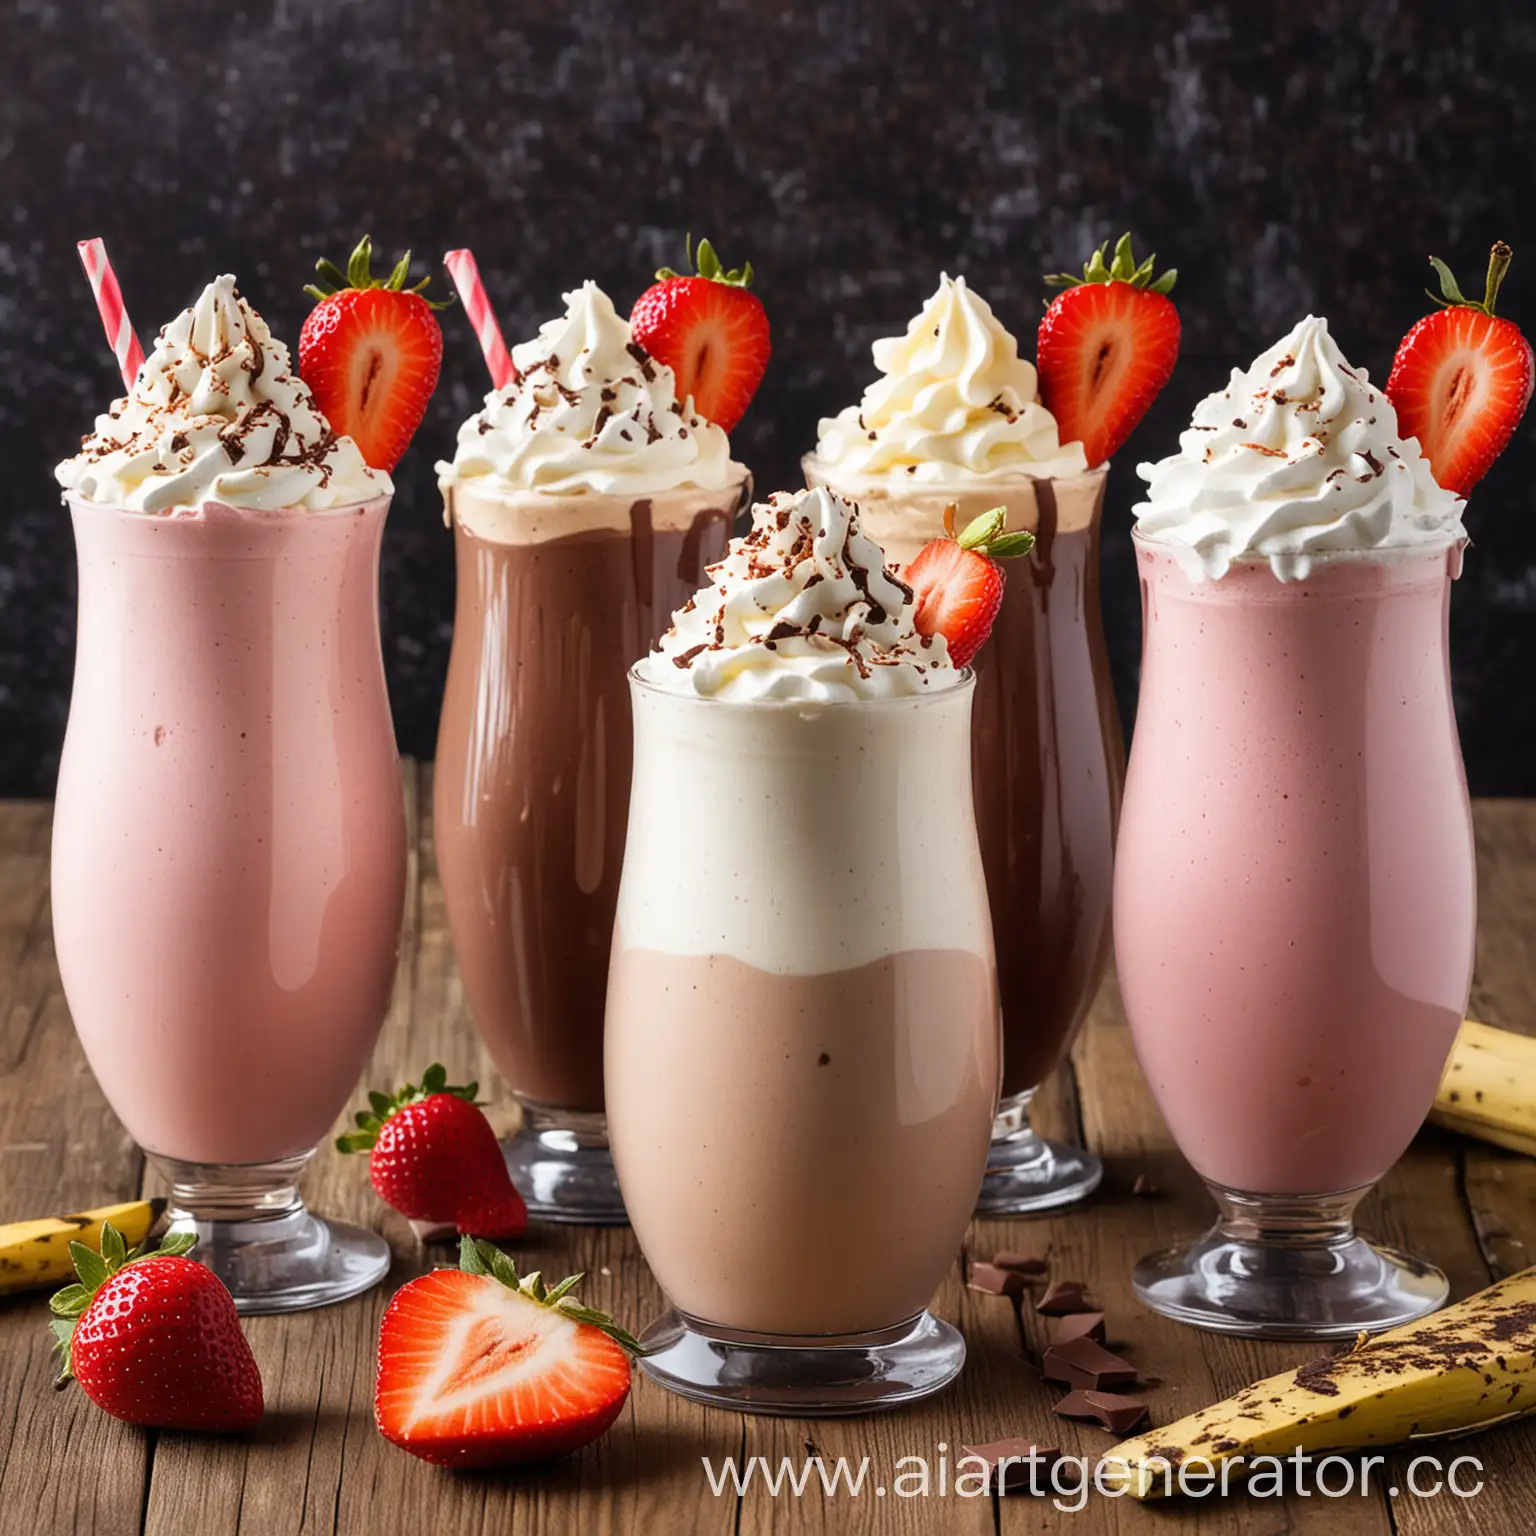 Delicious-Milkshakes-Chocolate-Banana-Strawberry-and-Whipped-Cream